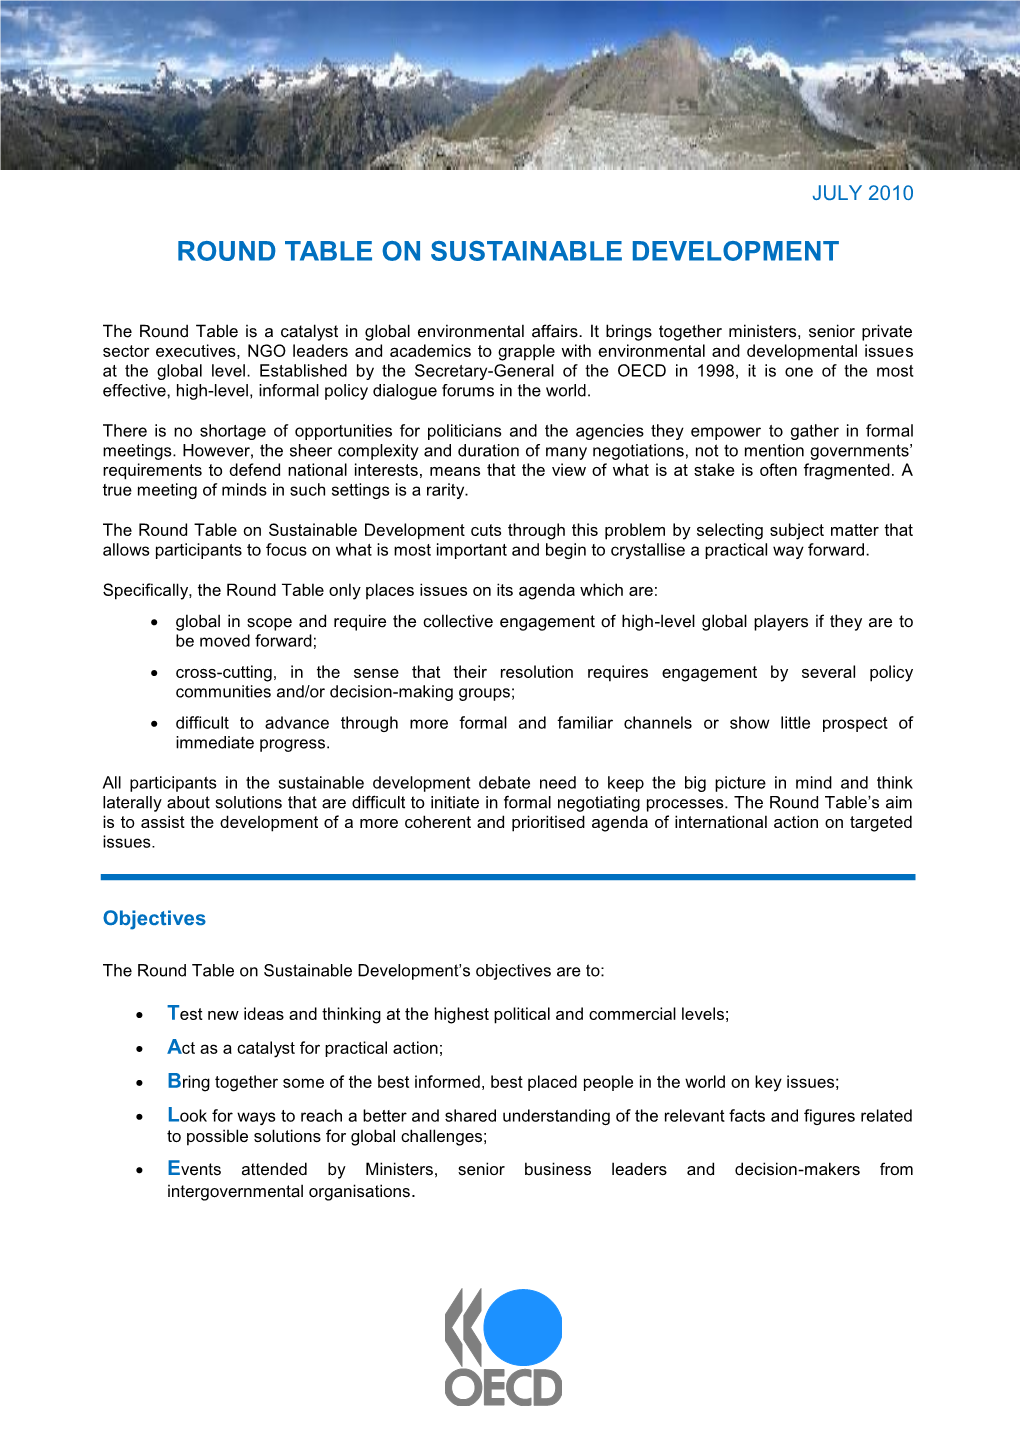 Round Table on Sustainable Development